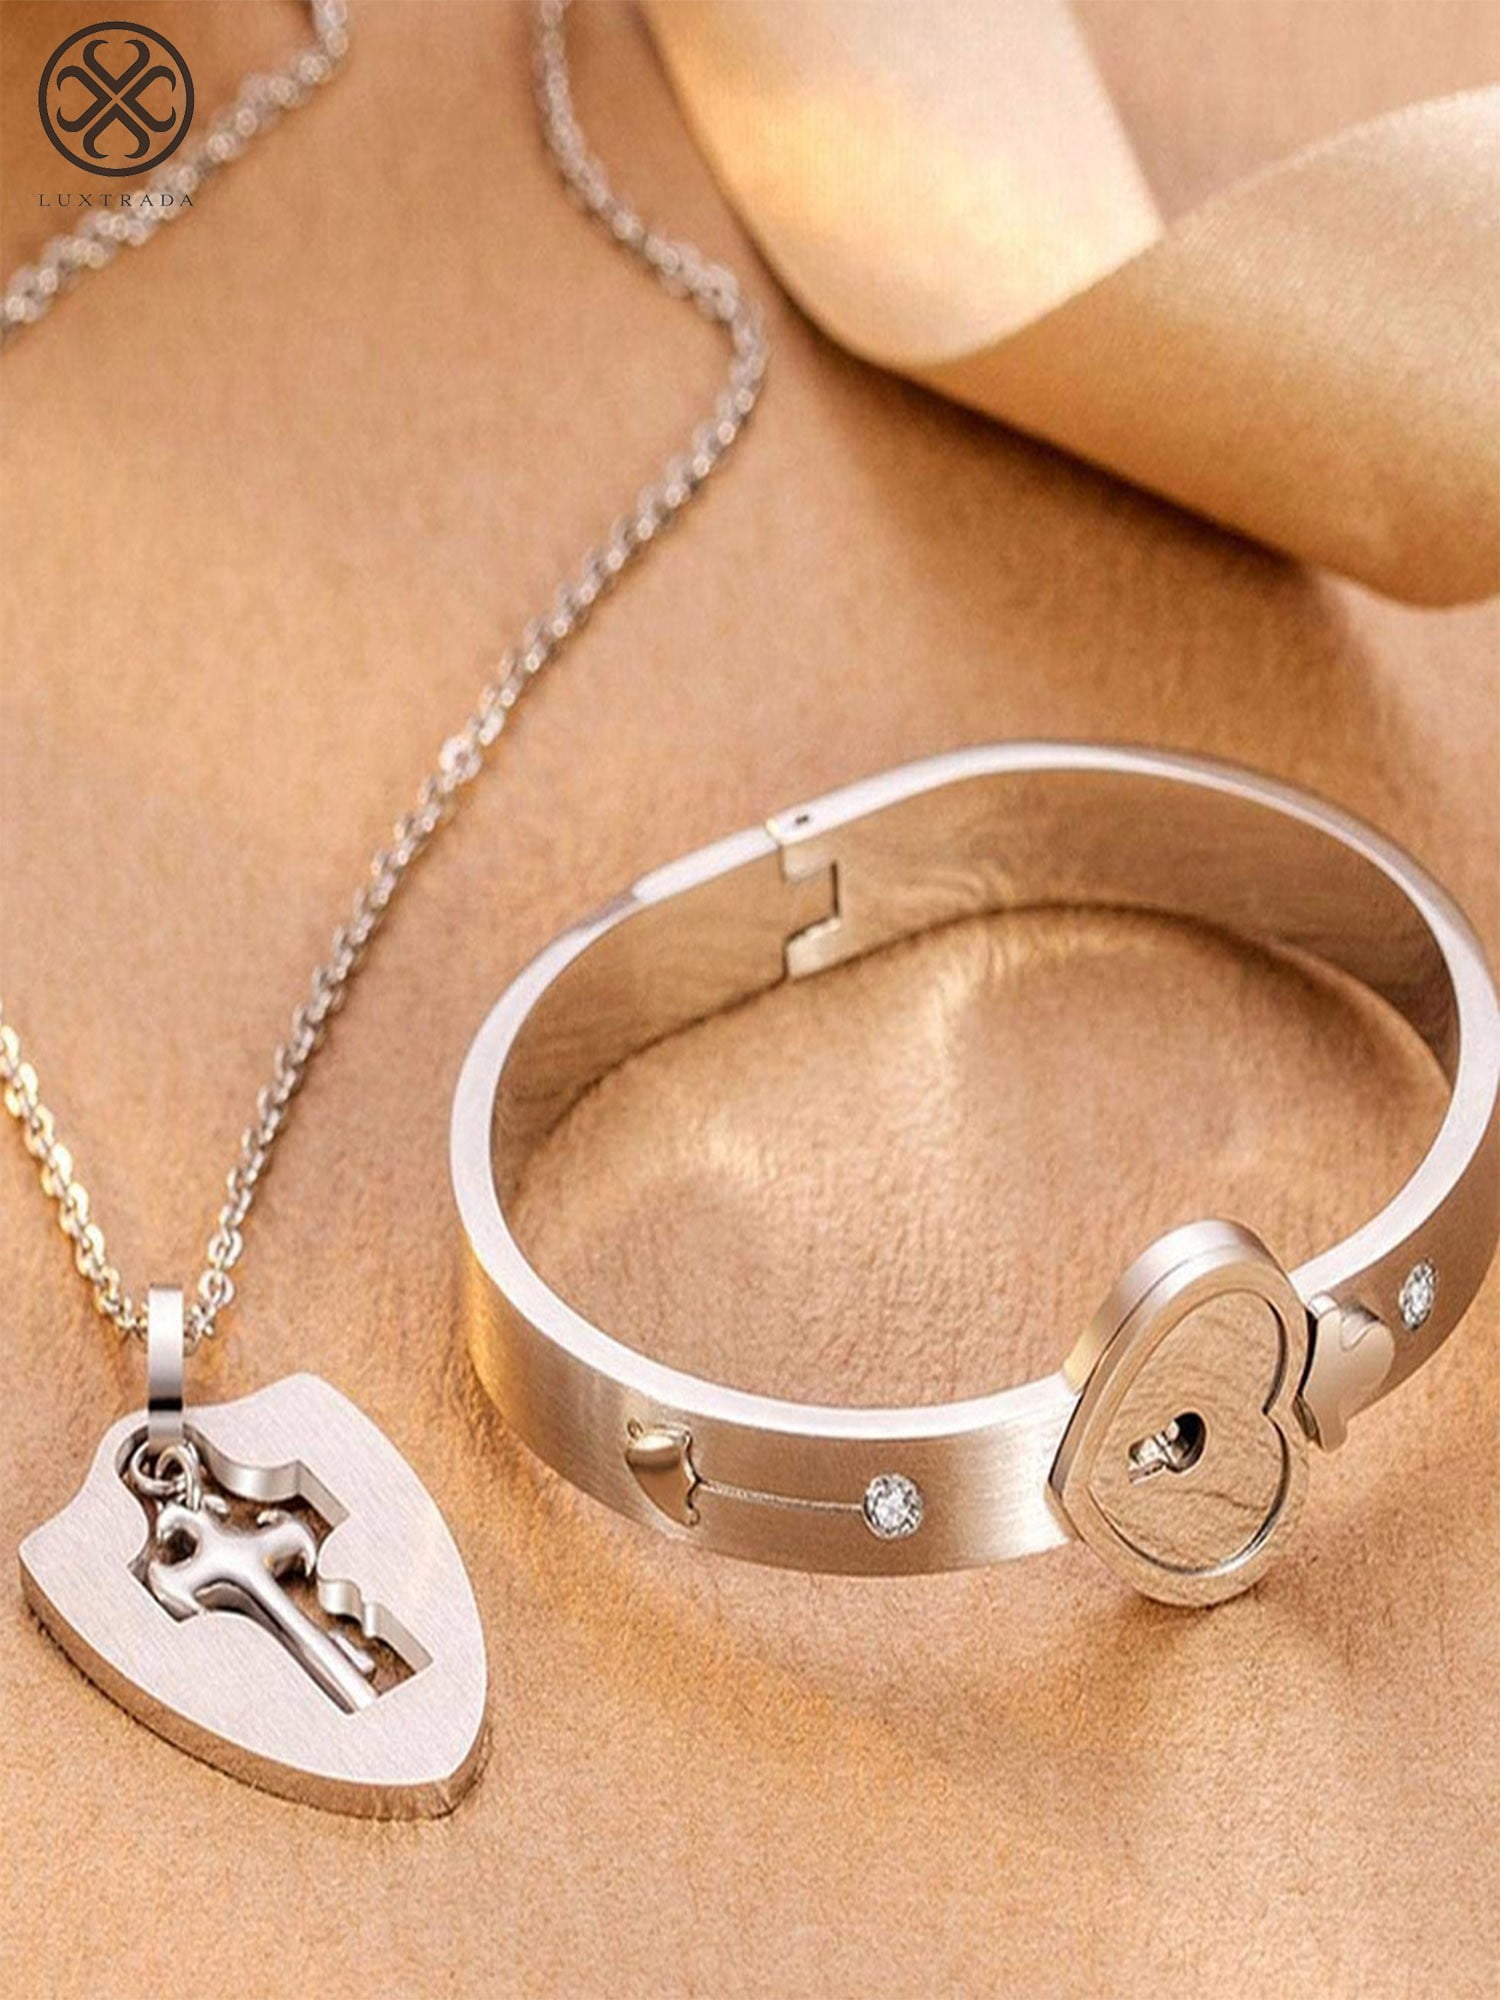 Buy the Cuffed Heart Lock Jeweled Bracelet & Key Necklace Set Ds Dom Sub  BDSM - XR